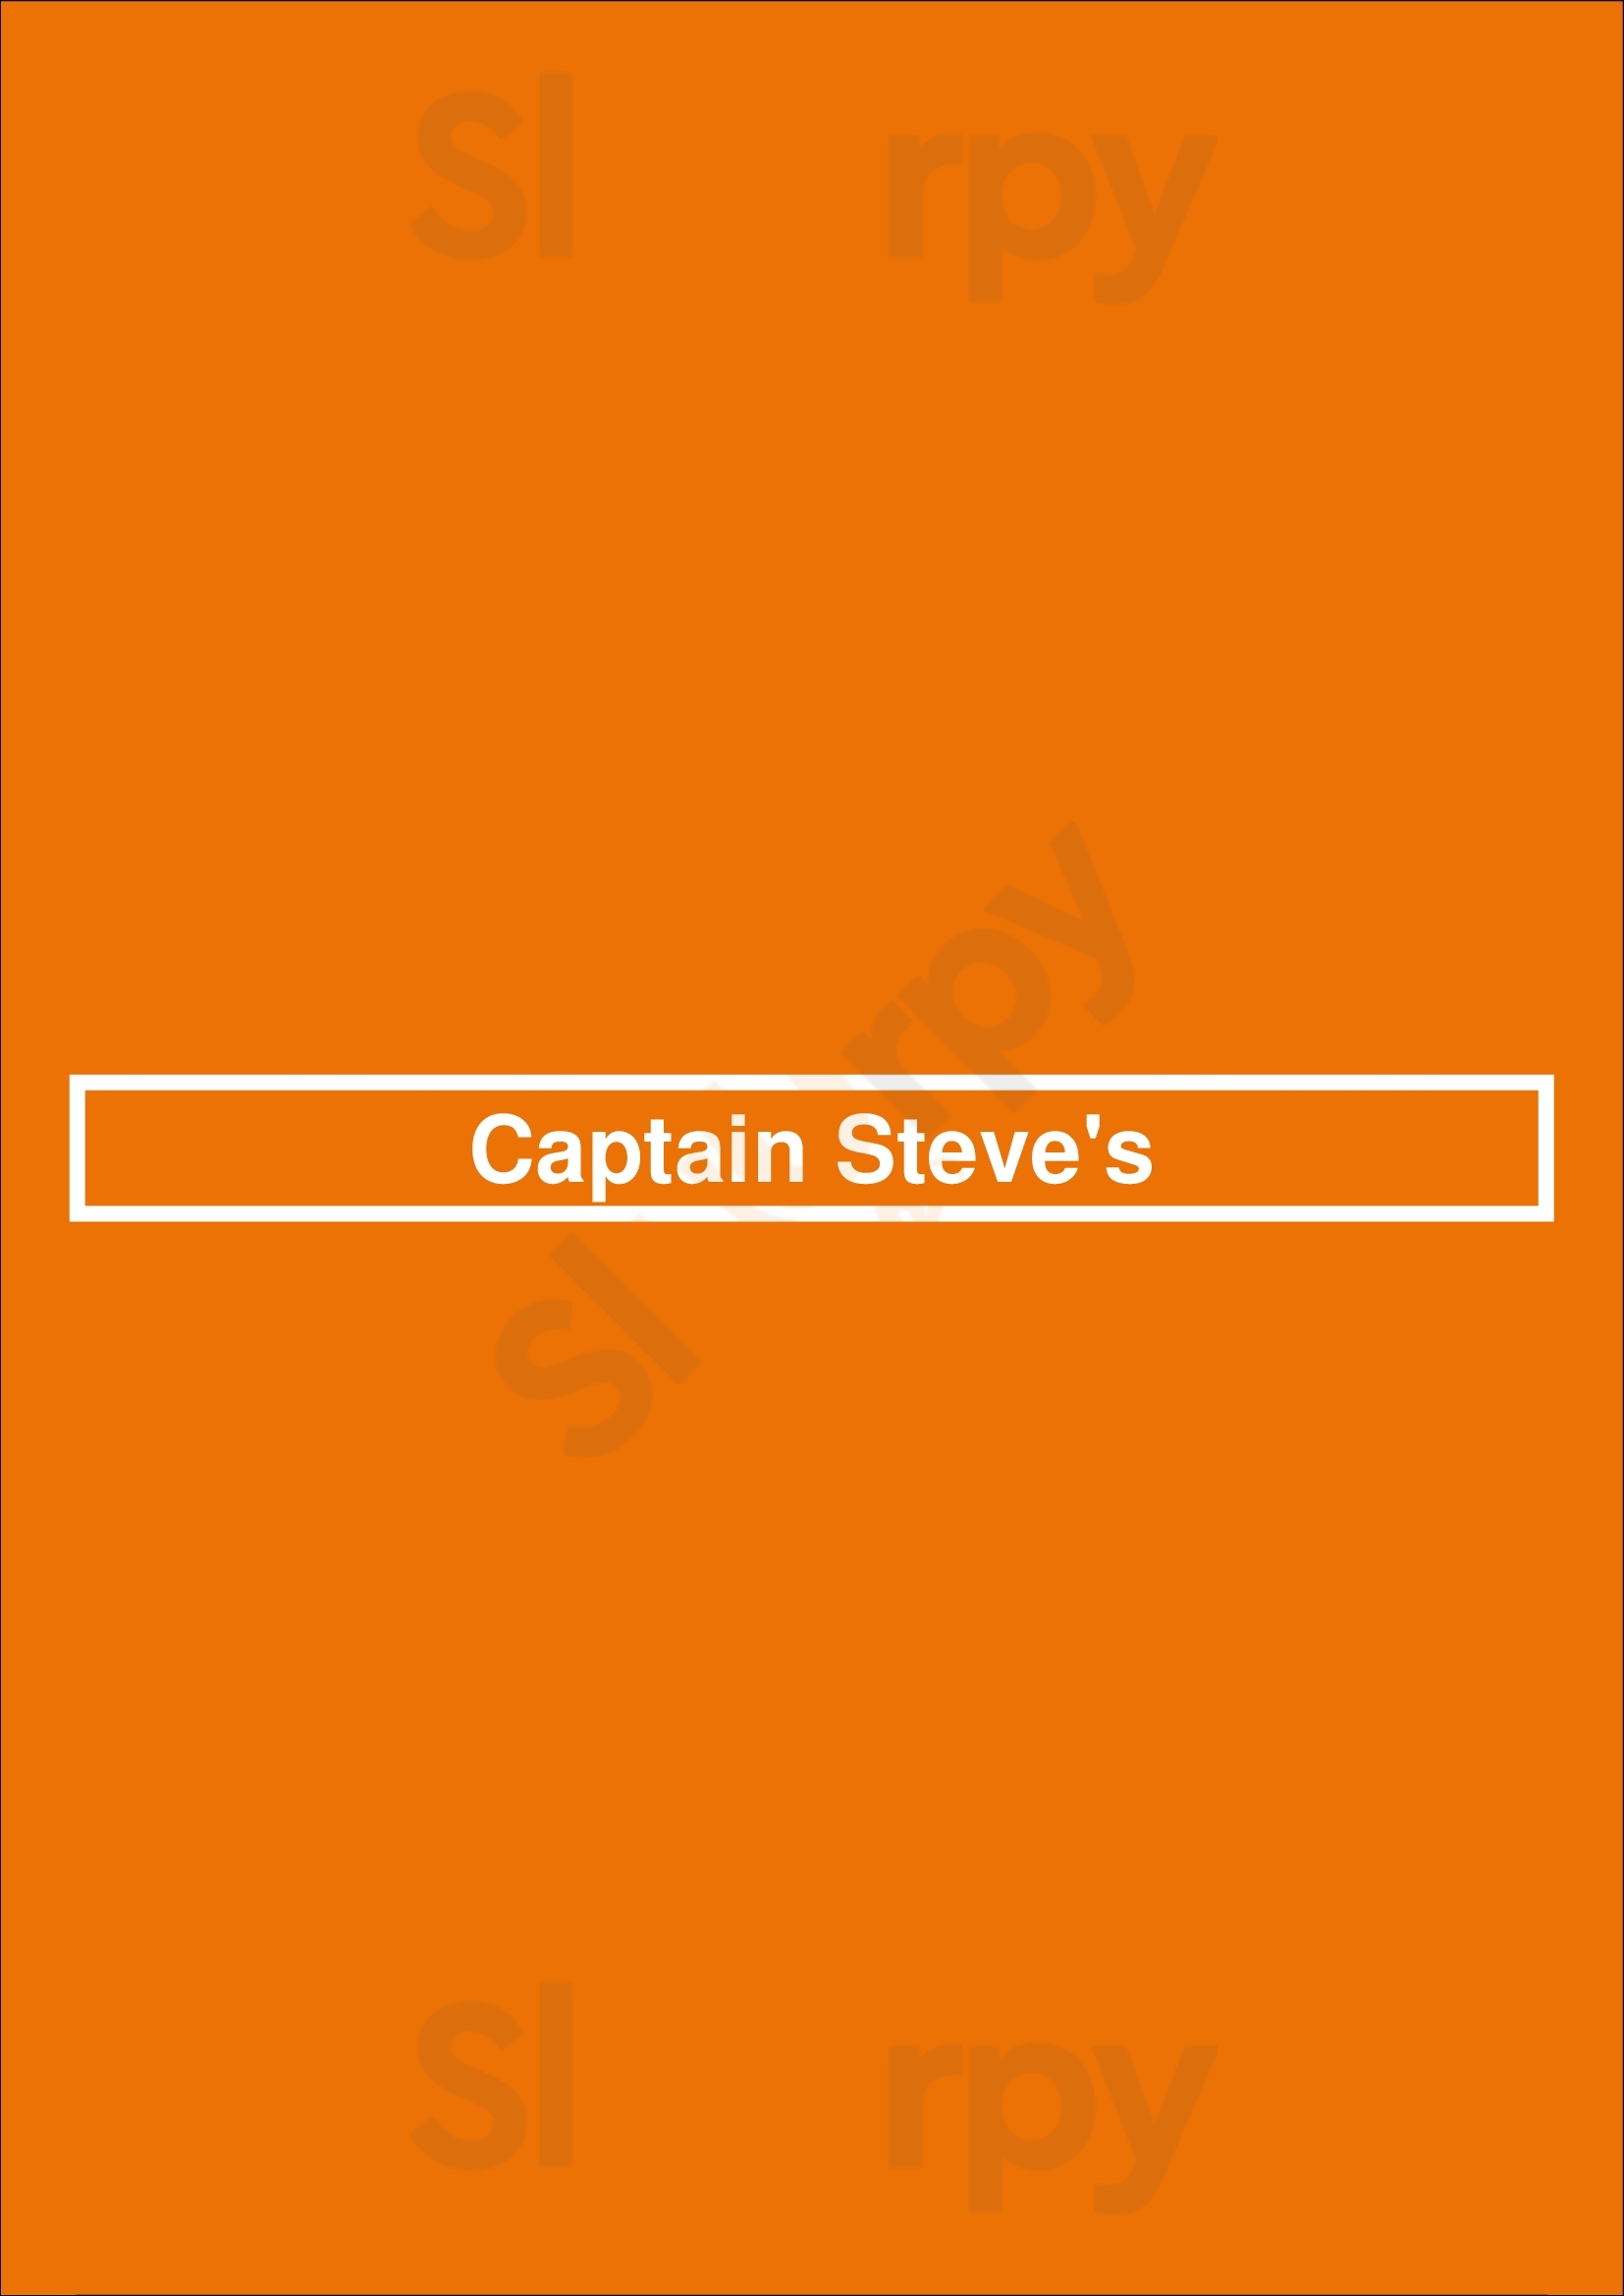 Captain Steve's Charlotte Menu - 1